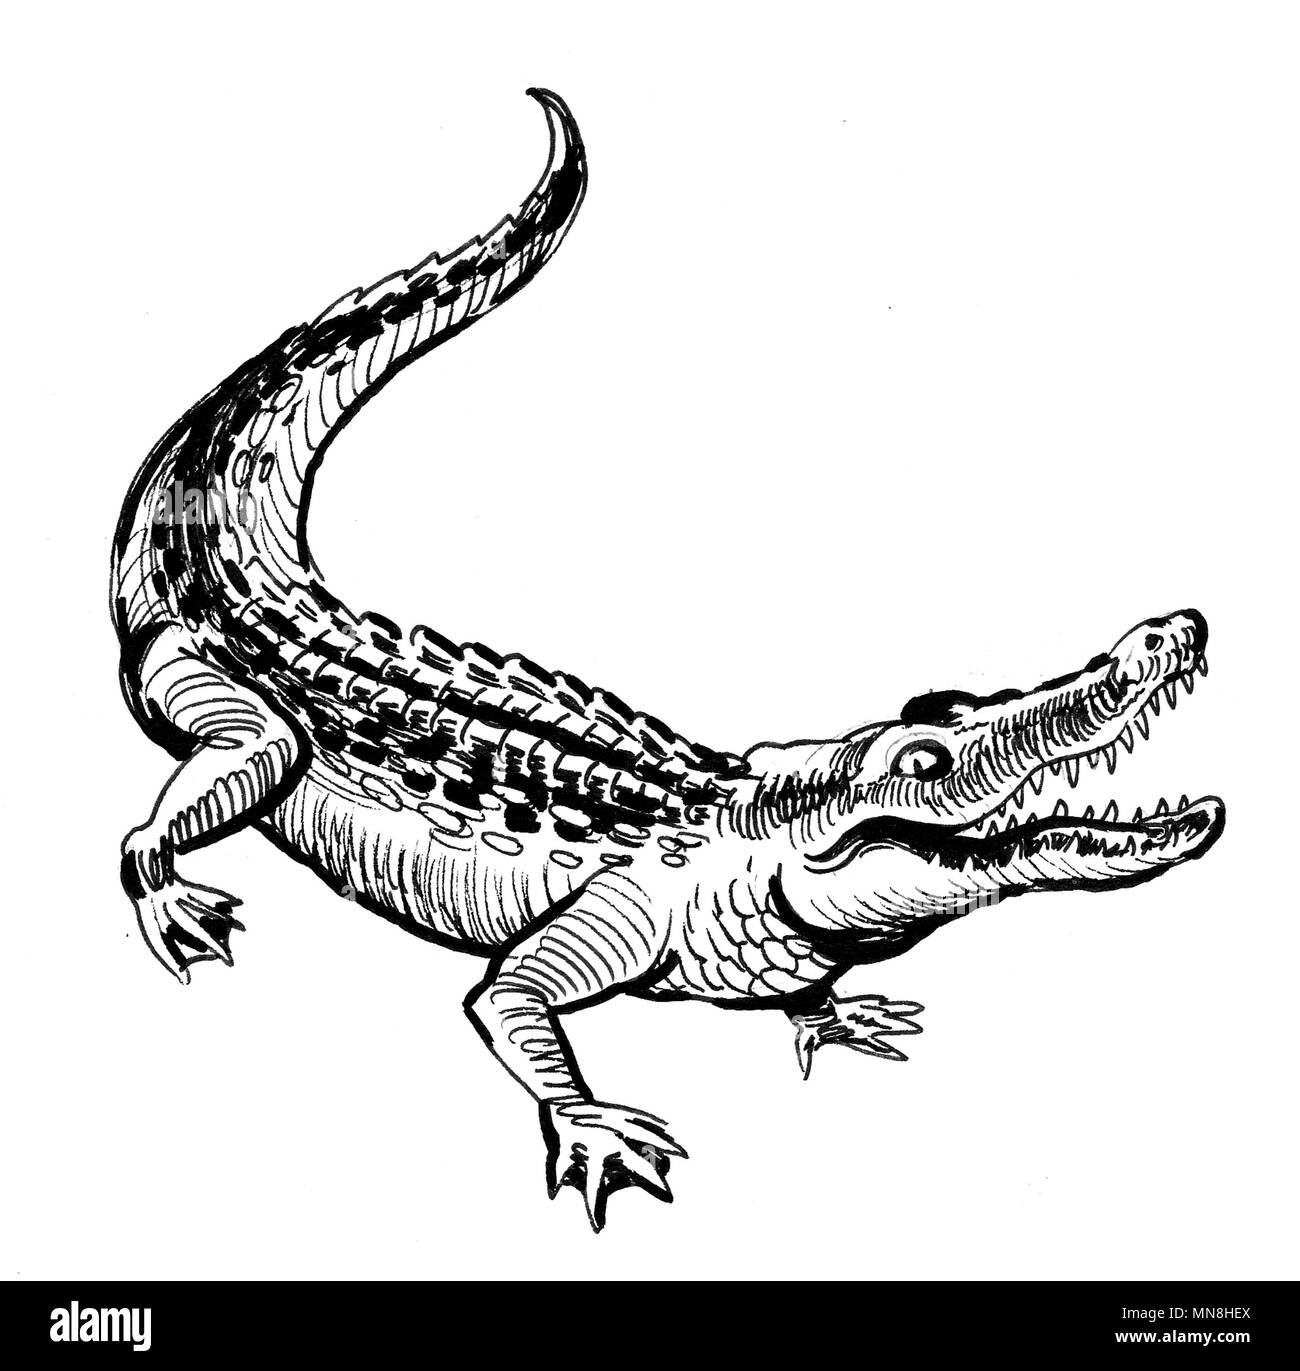 How to Draw Crocodile, Wild Animals